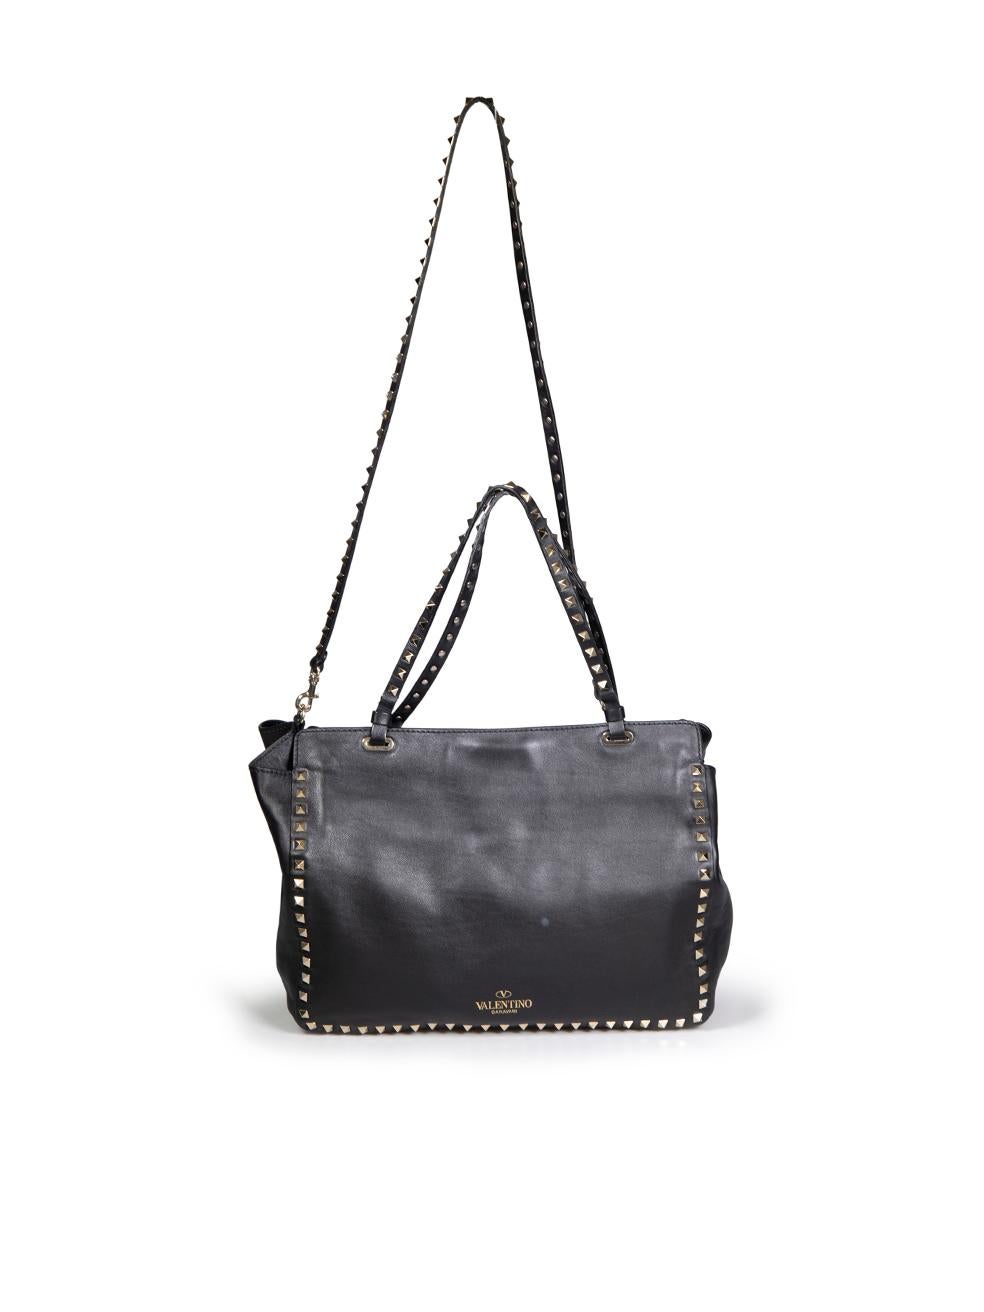 Women's Valentino Black Leather Medium Rockstud Tote Bag For Sale